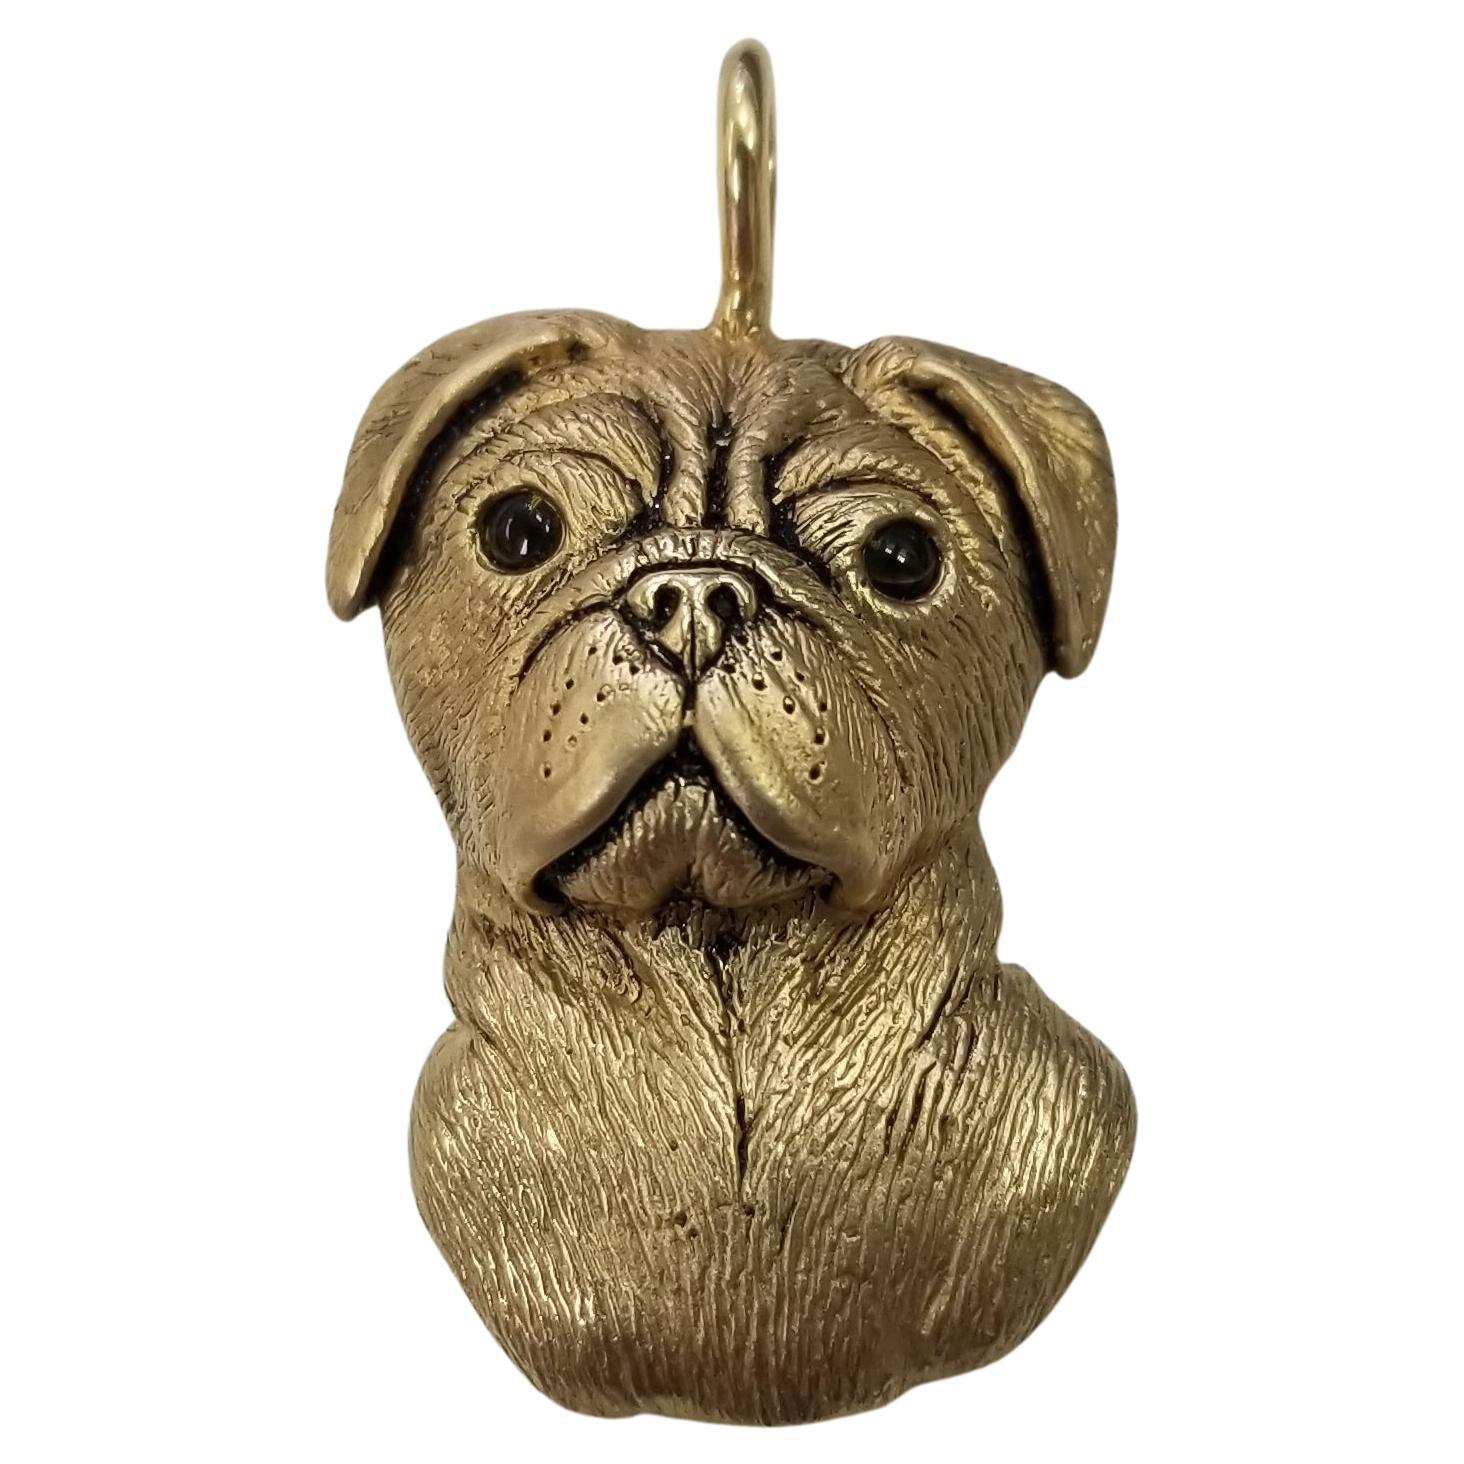 Madleine Kay 14k Yellow Gold "Pug Dog" Pendant with Garnet Eye For Sale